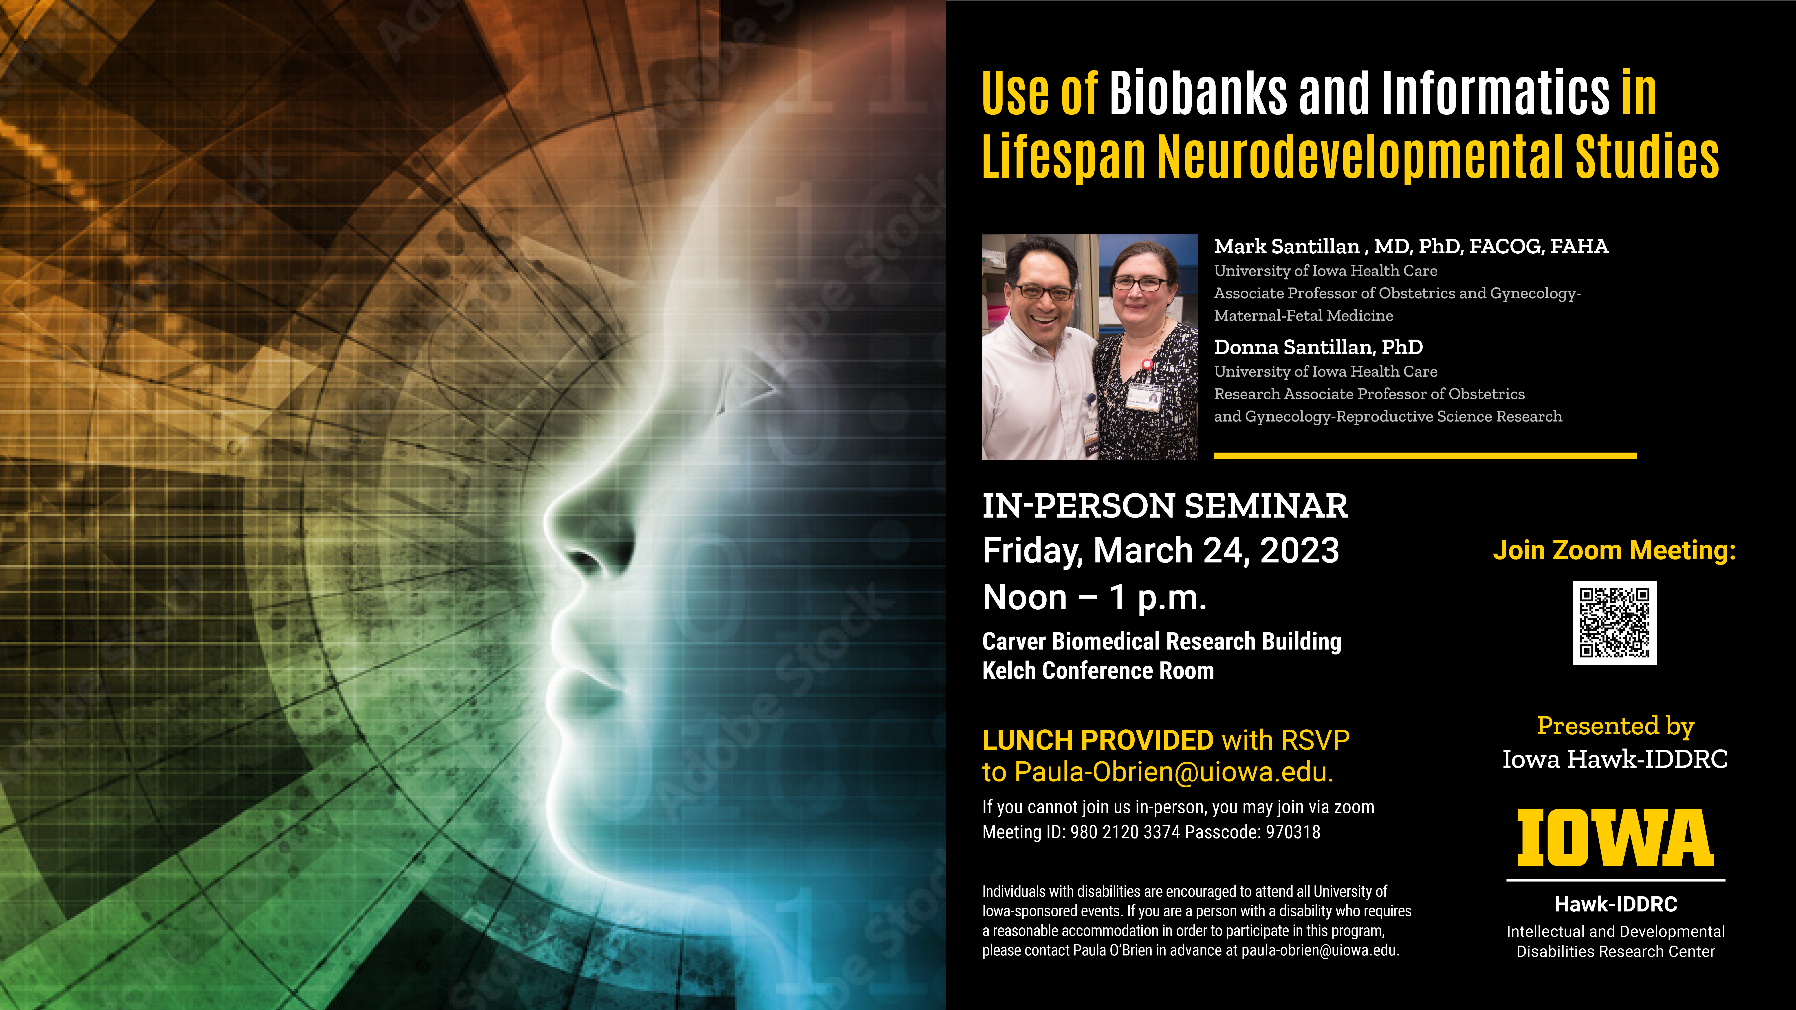 Use of Biobanks and Informatics in Lifespan Neurodevelopmental Studies